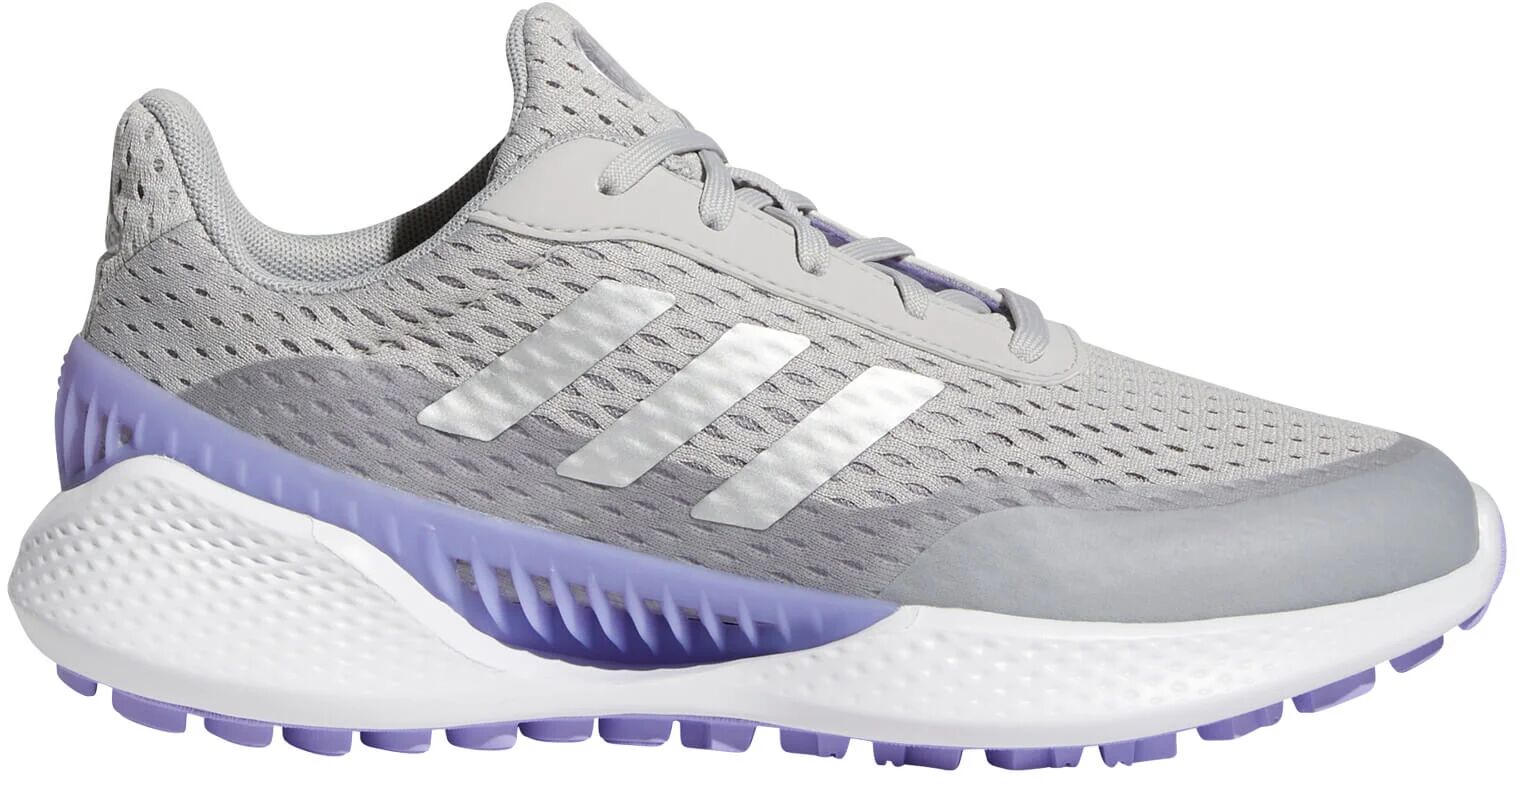 adidas Womens Summervent Golf Shoes - Grey Two/Silver Metallic/Light Purple - 7.5 - M